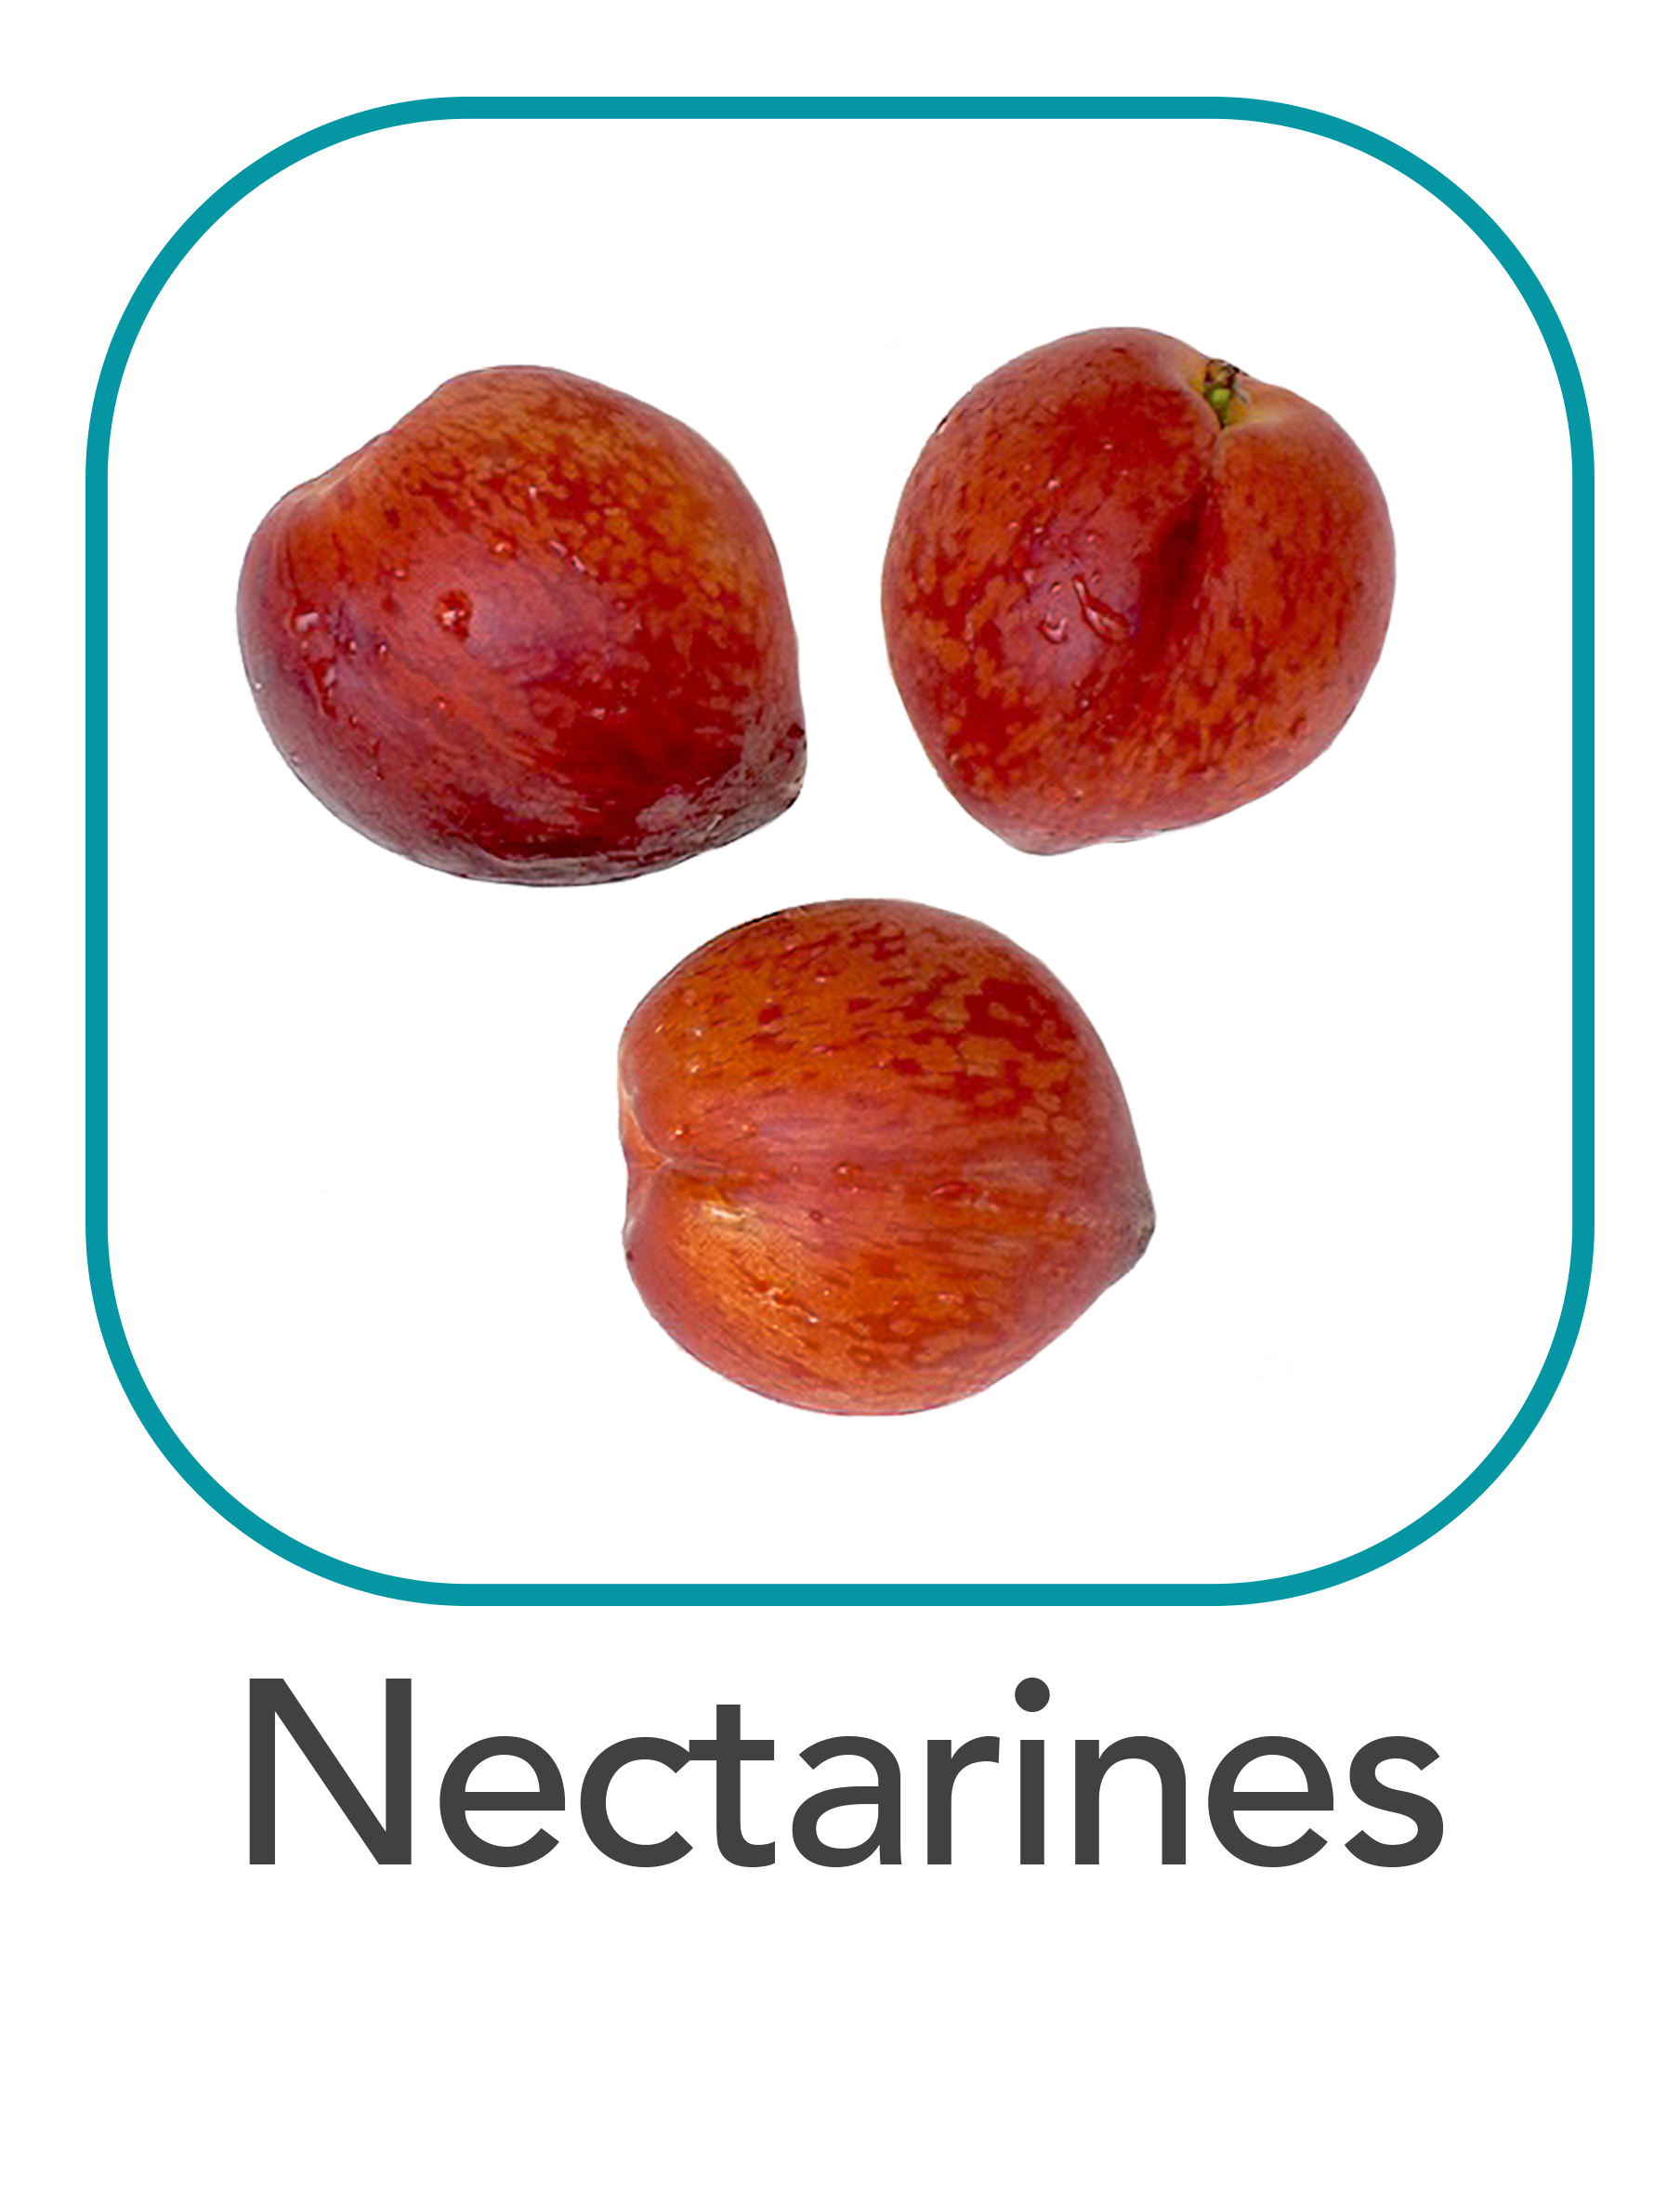 nectarines_web.png